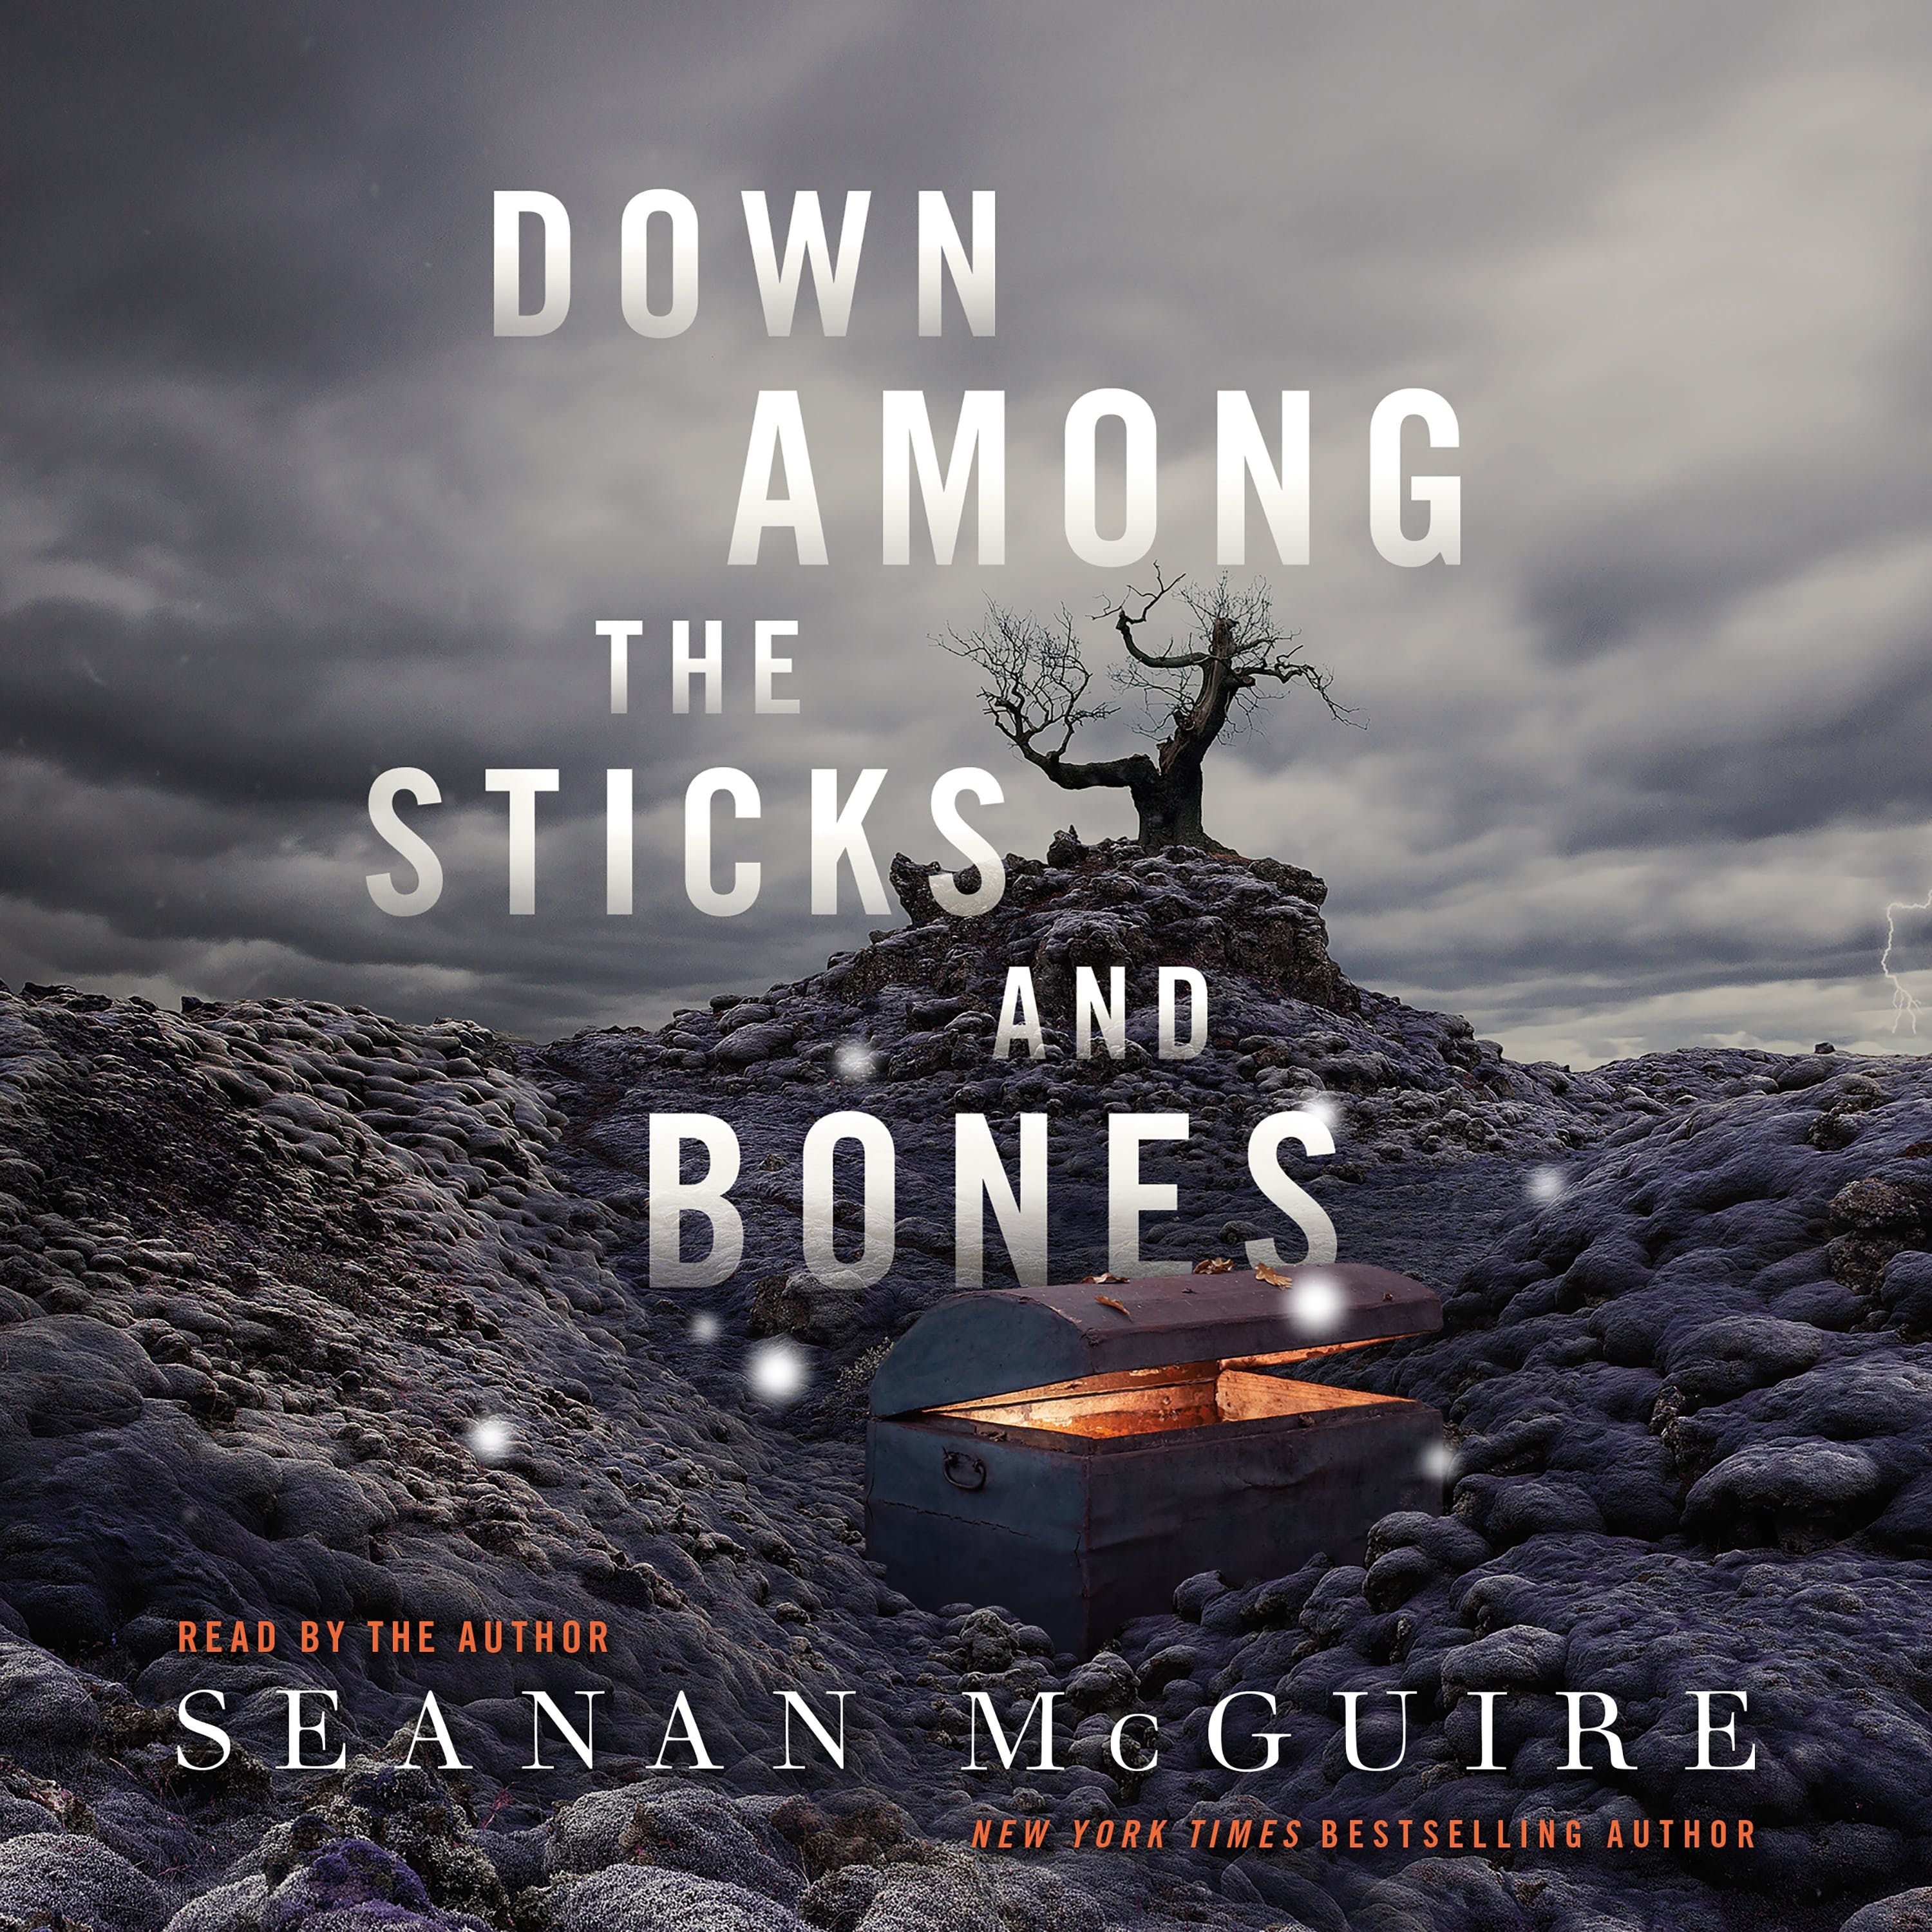 Seanan McGuire: Down among the sticks and bones (AudiobookFormat)